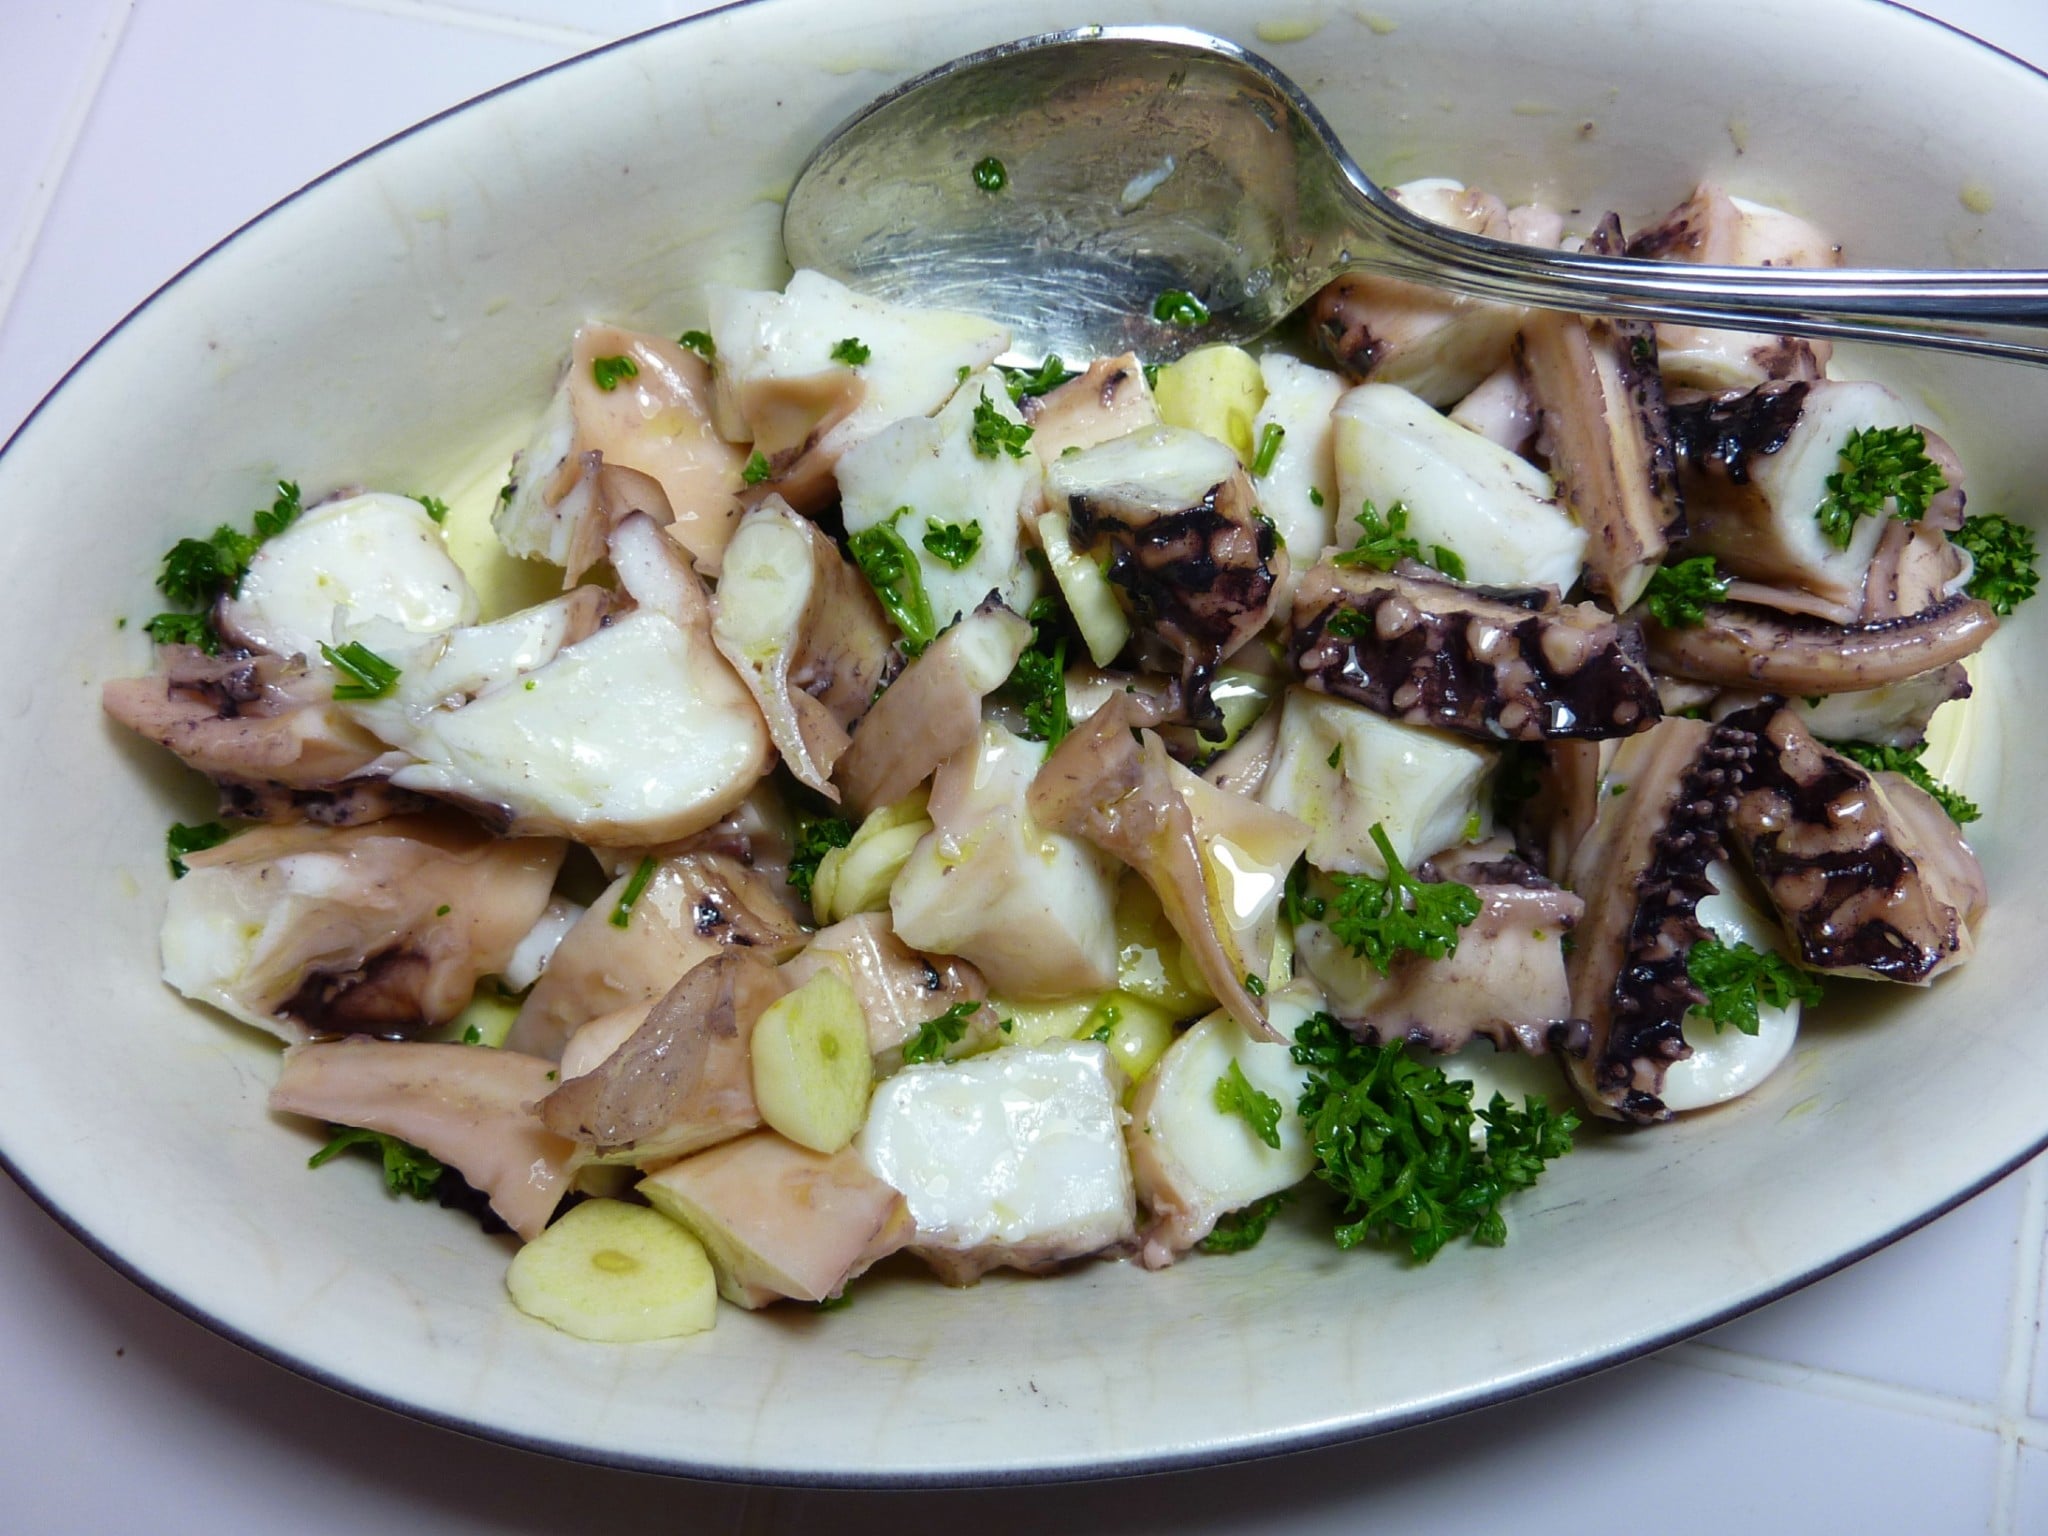 Italian octopus salad without potatoes